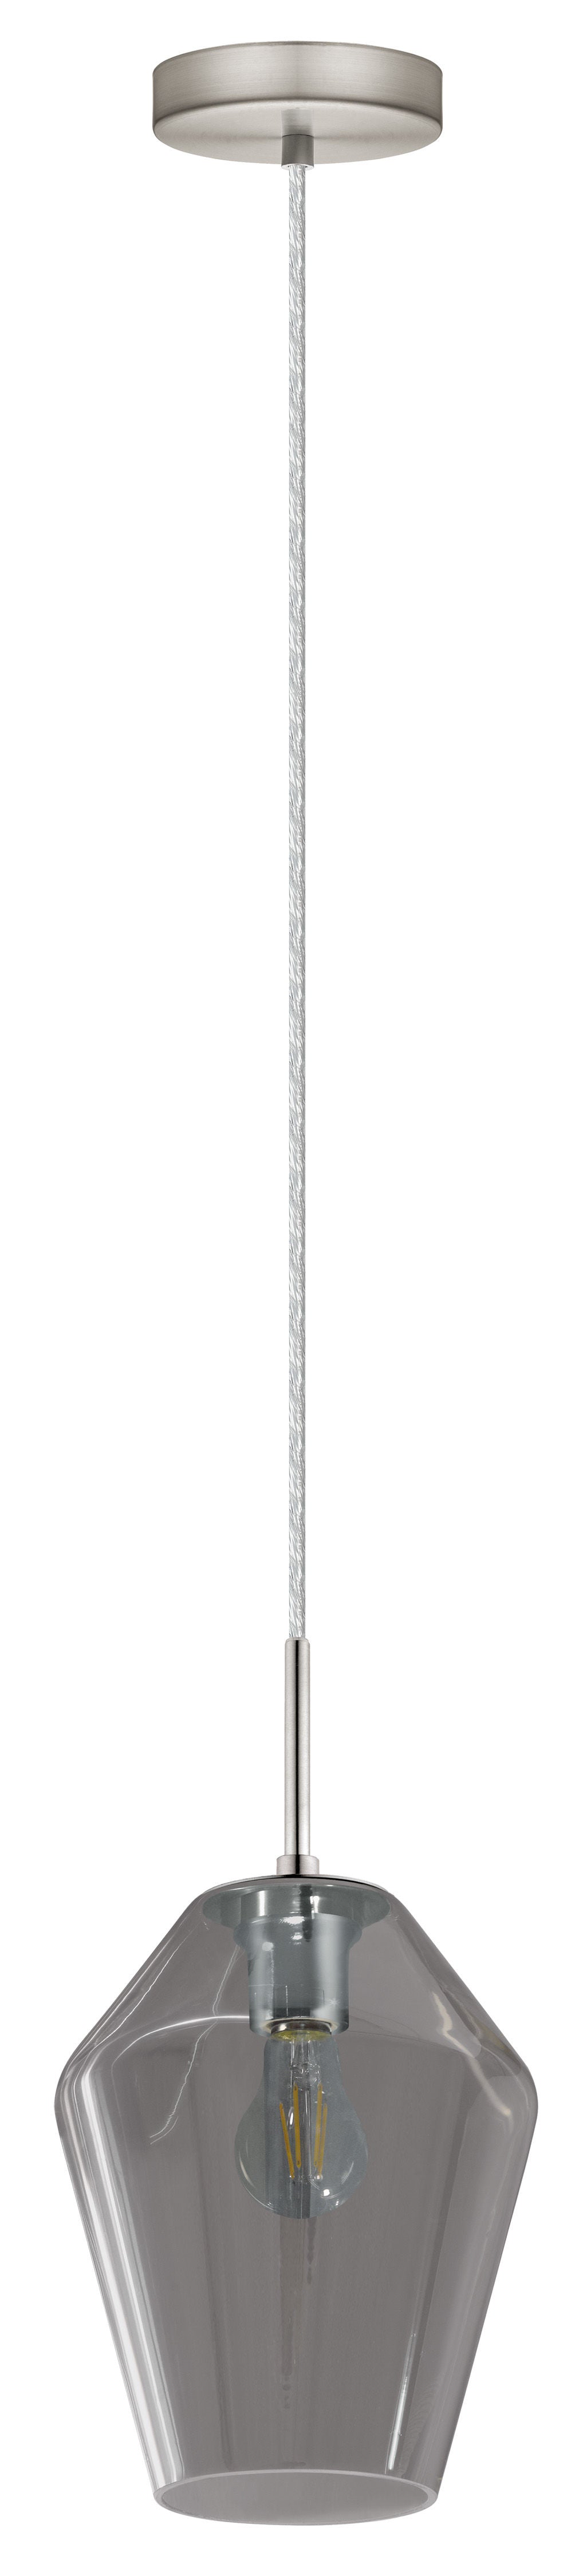 Murmillo Pendant Stainless steel - 202357A | EGLO